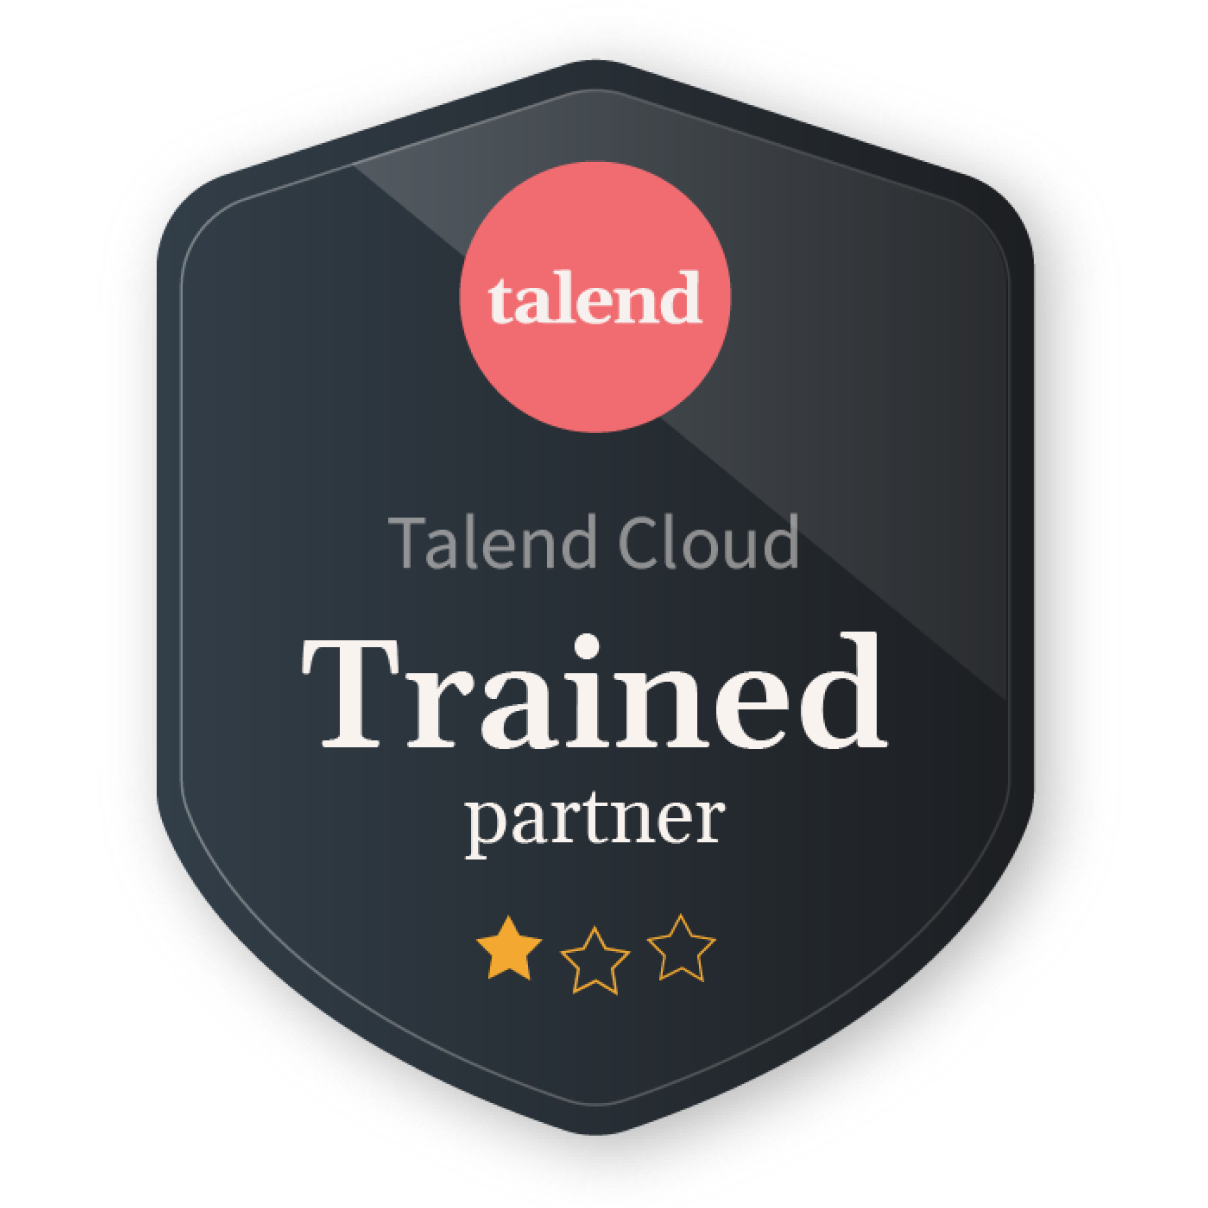 talend-cloud-trained-partner